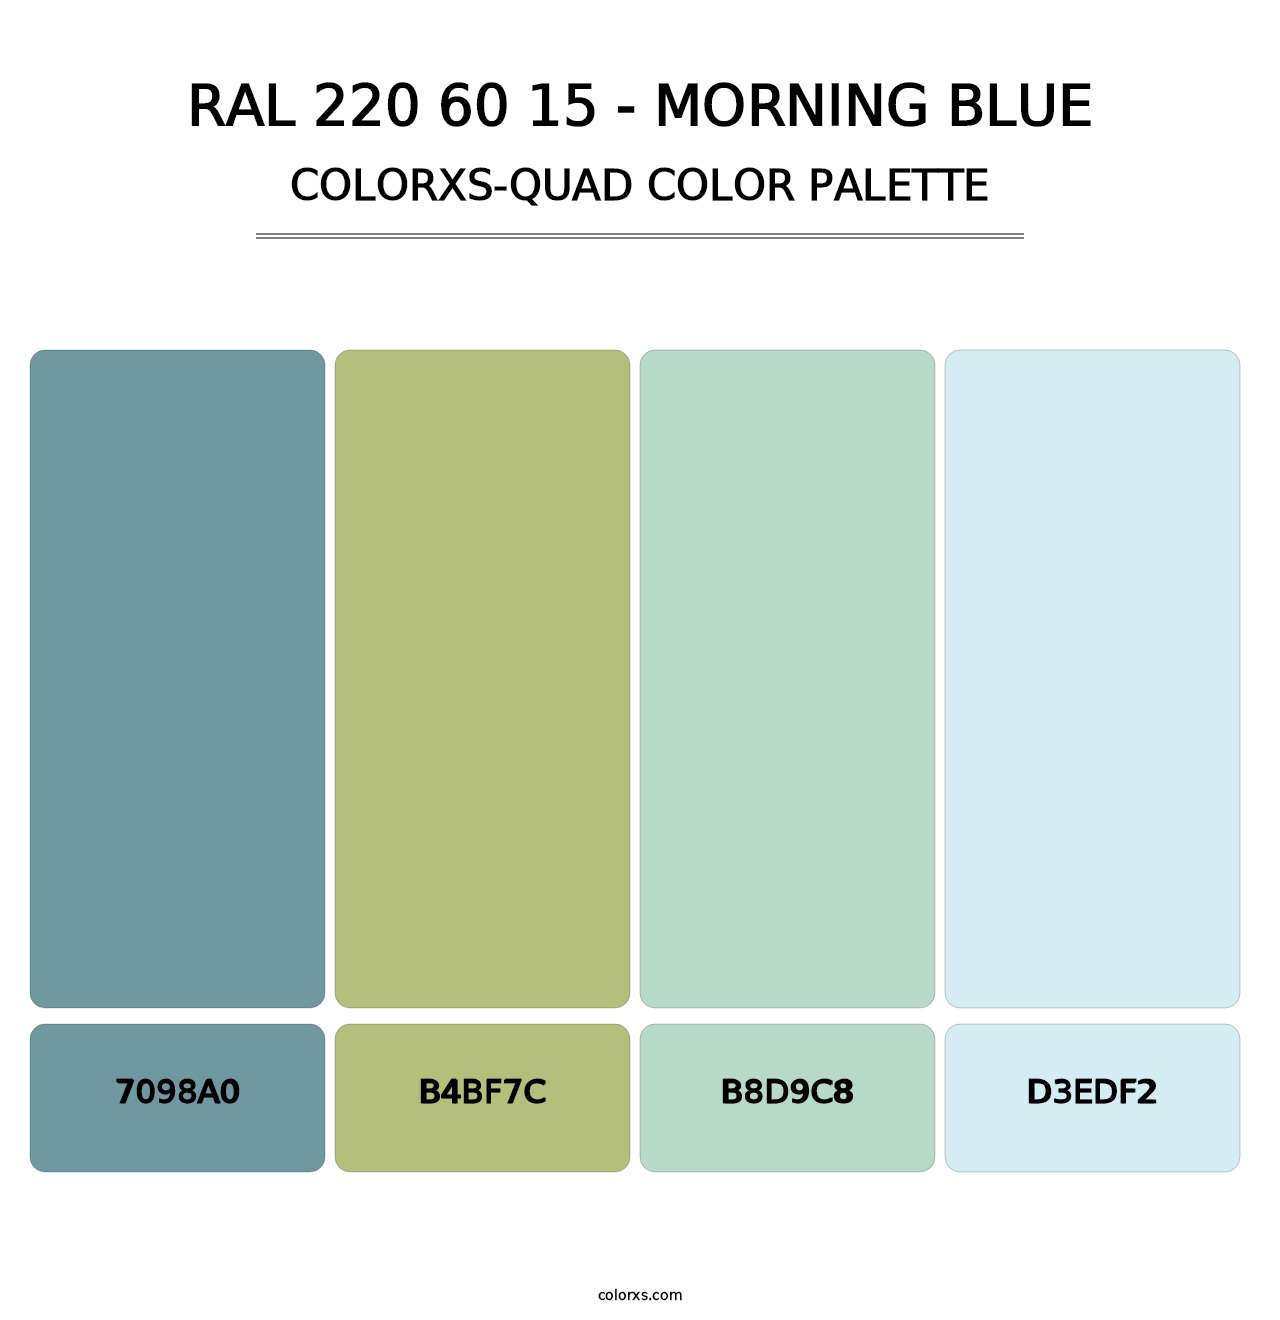 RAL 220 60 15 - Morning Blue - Colorxs Quad Palette